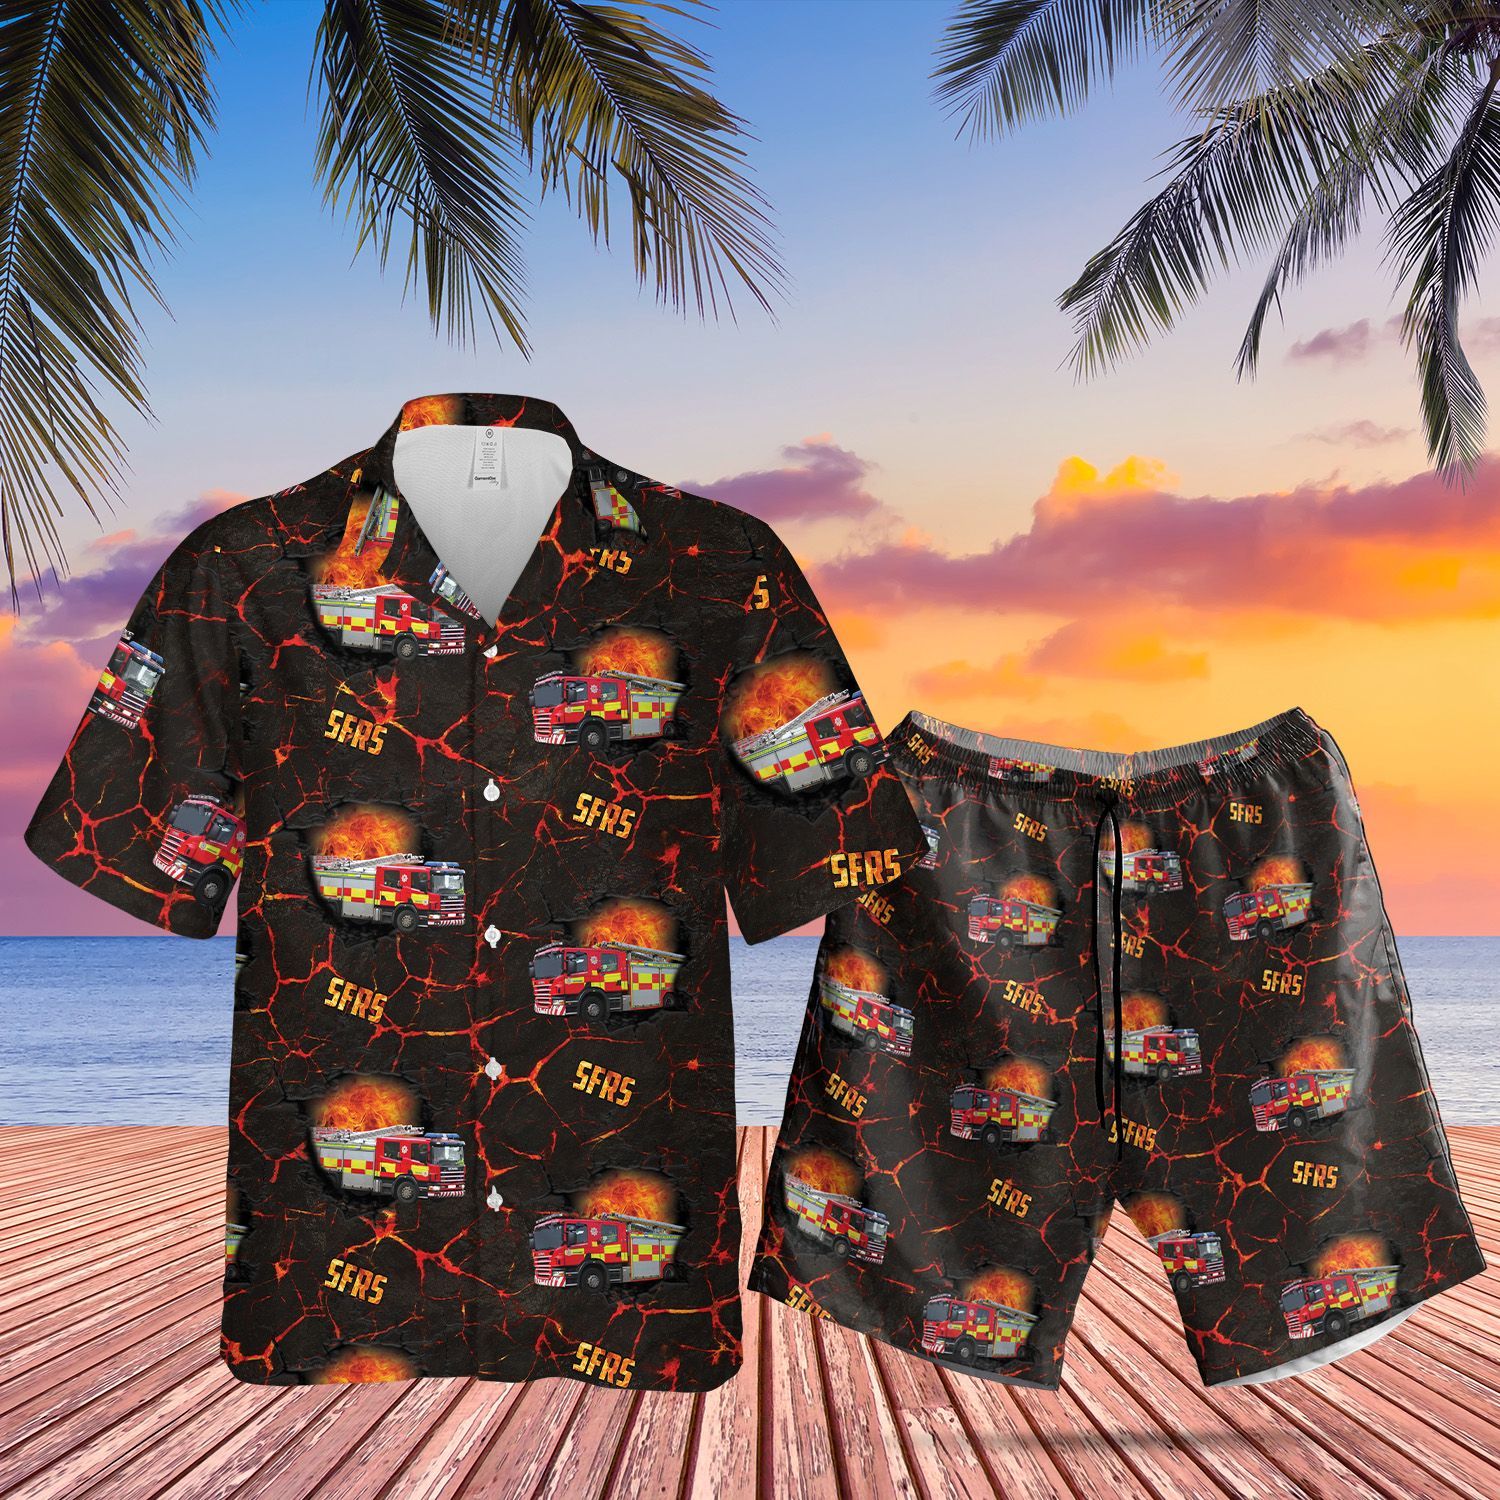 Grab a pair of these shorts and Hawaiian shirt and enjoy your next beach vacation 38